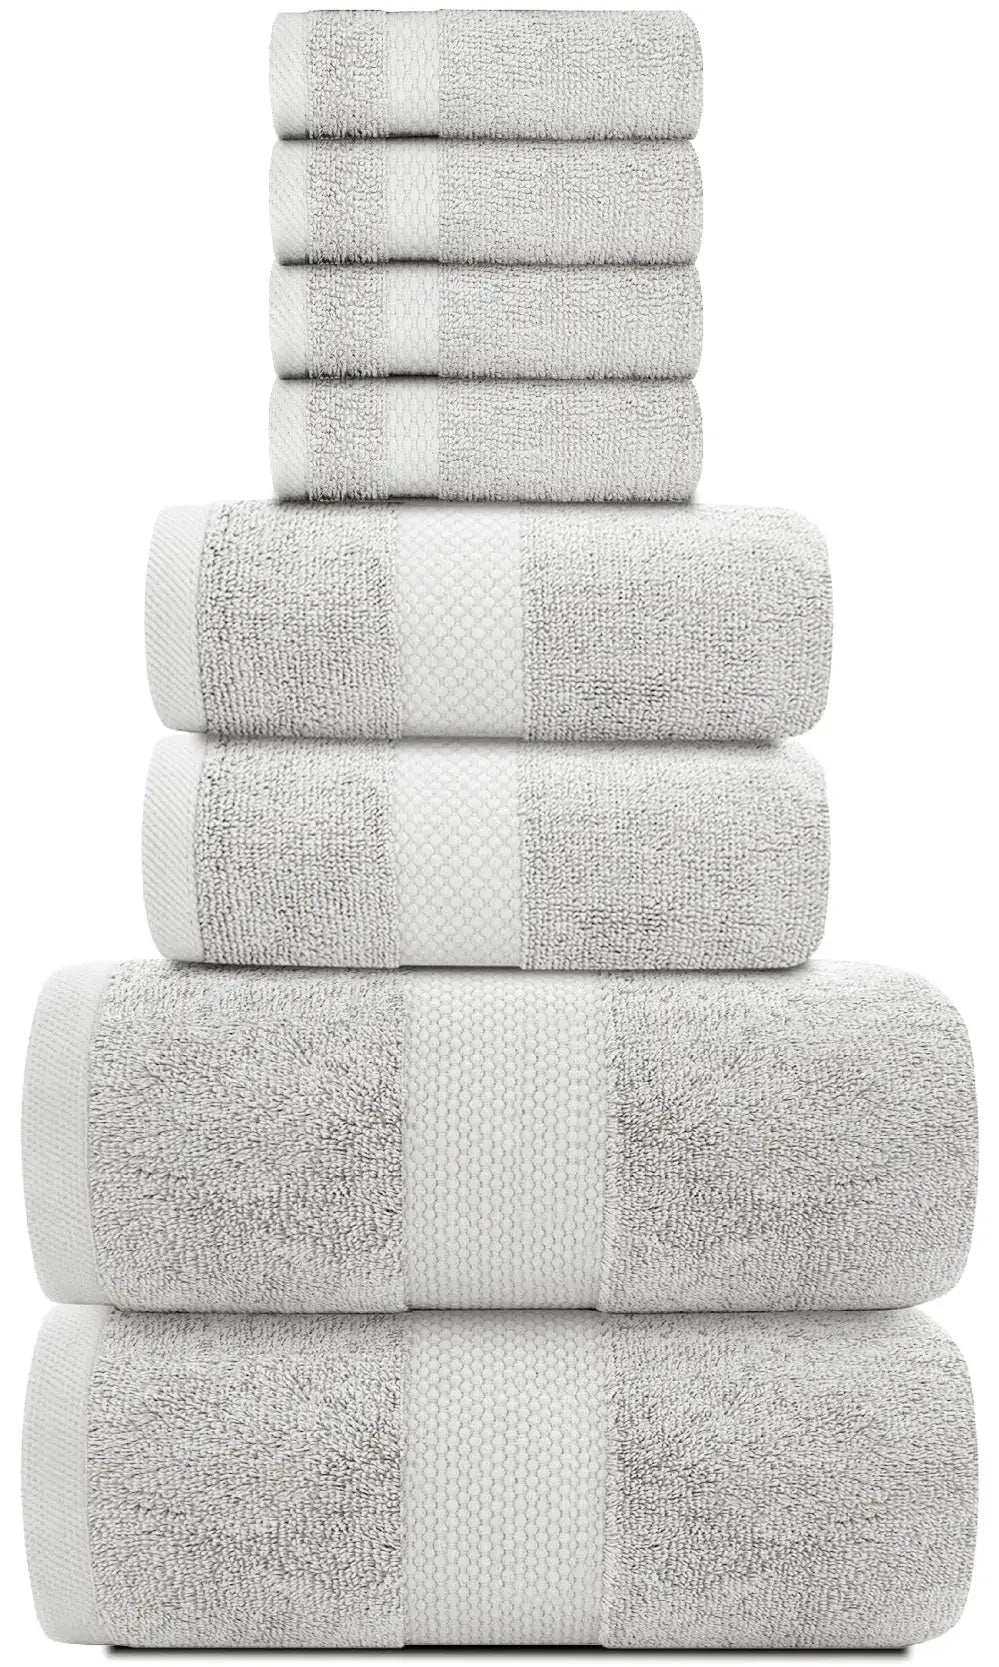 8Pc Silver Towel Set